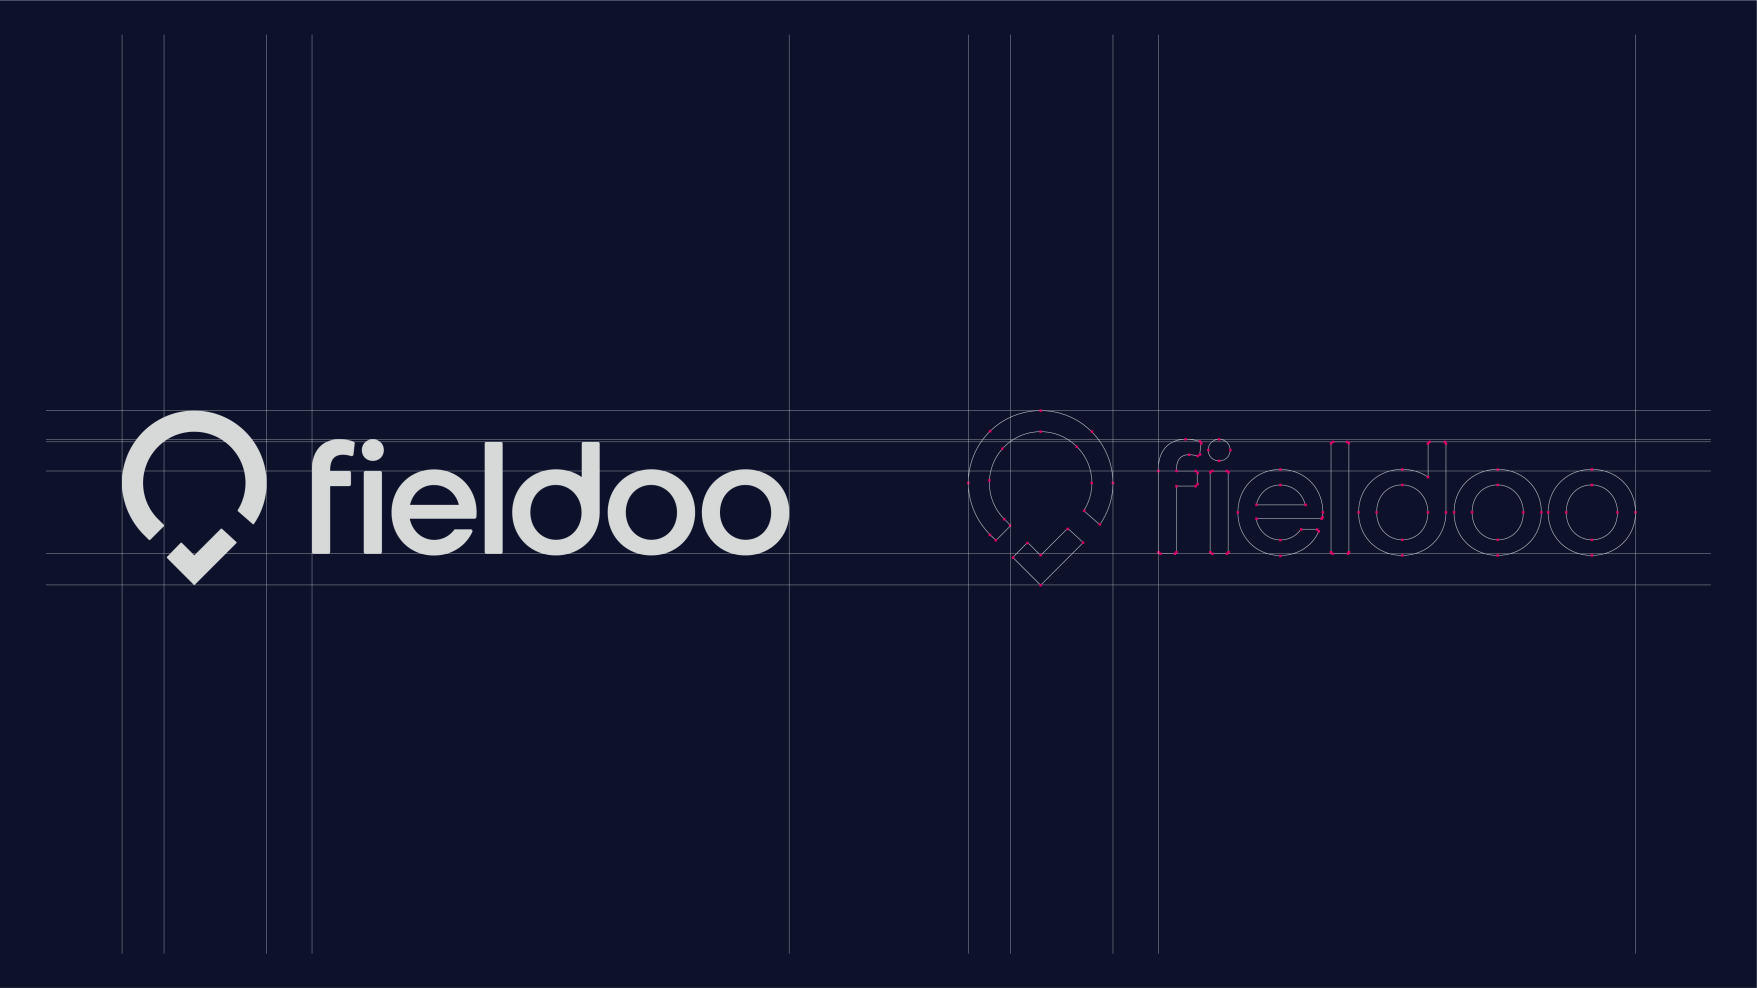  fieldoo-work-06